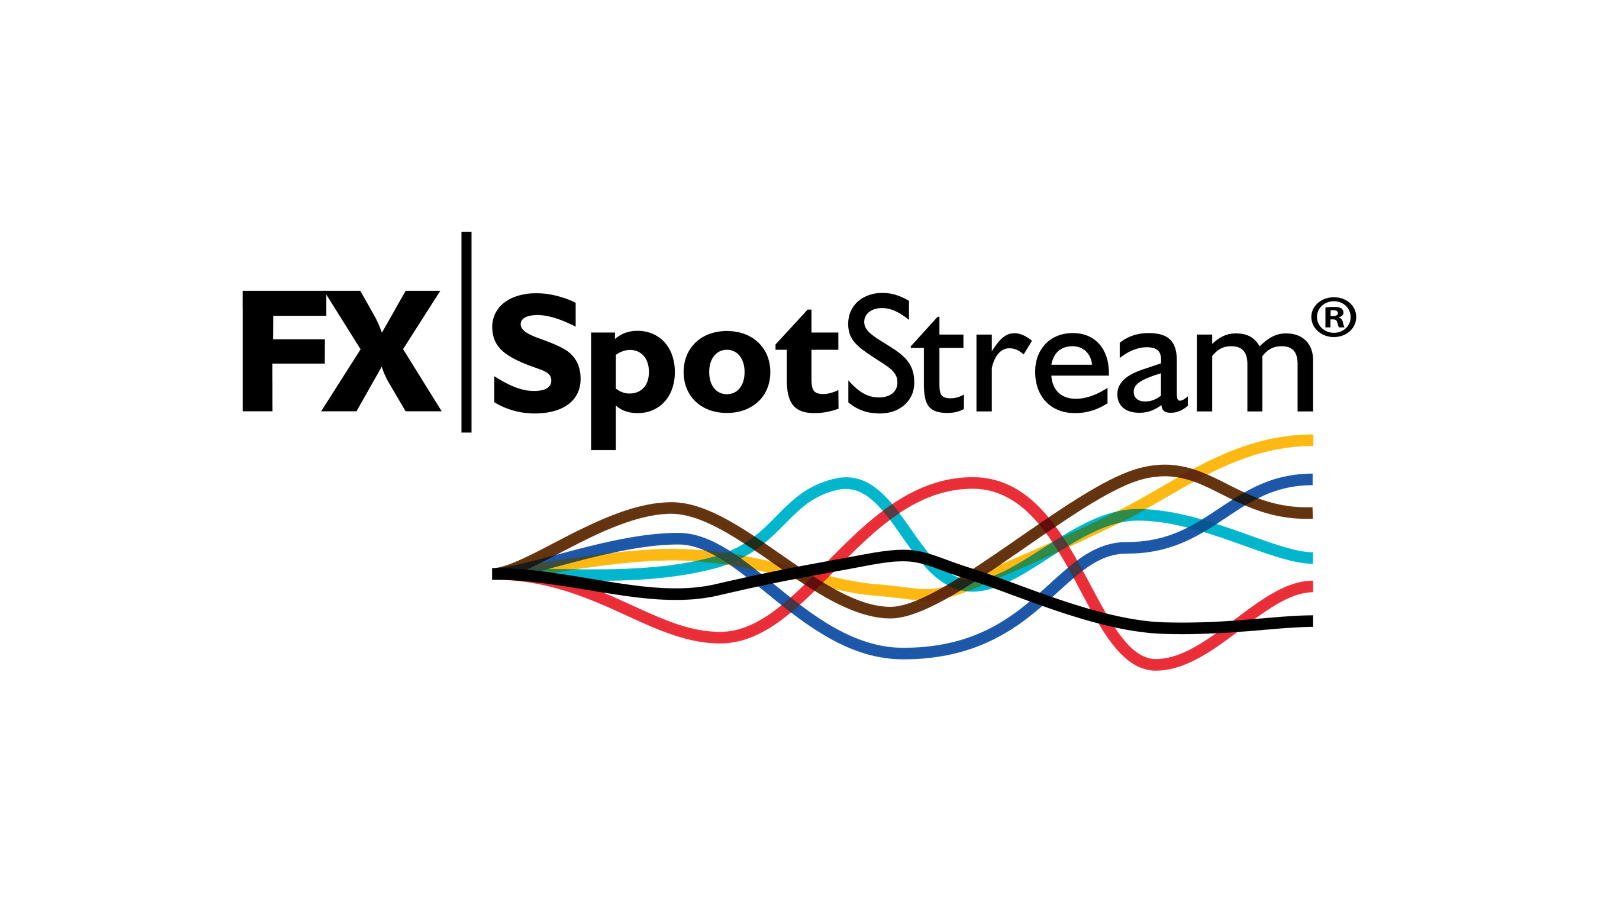 FXSpotStream Reports November 2021 Volumes, up 15.8% on November 2020, 2.15% on October